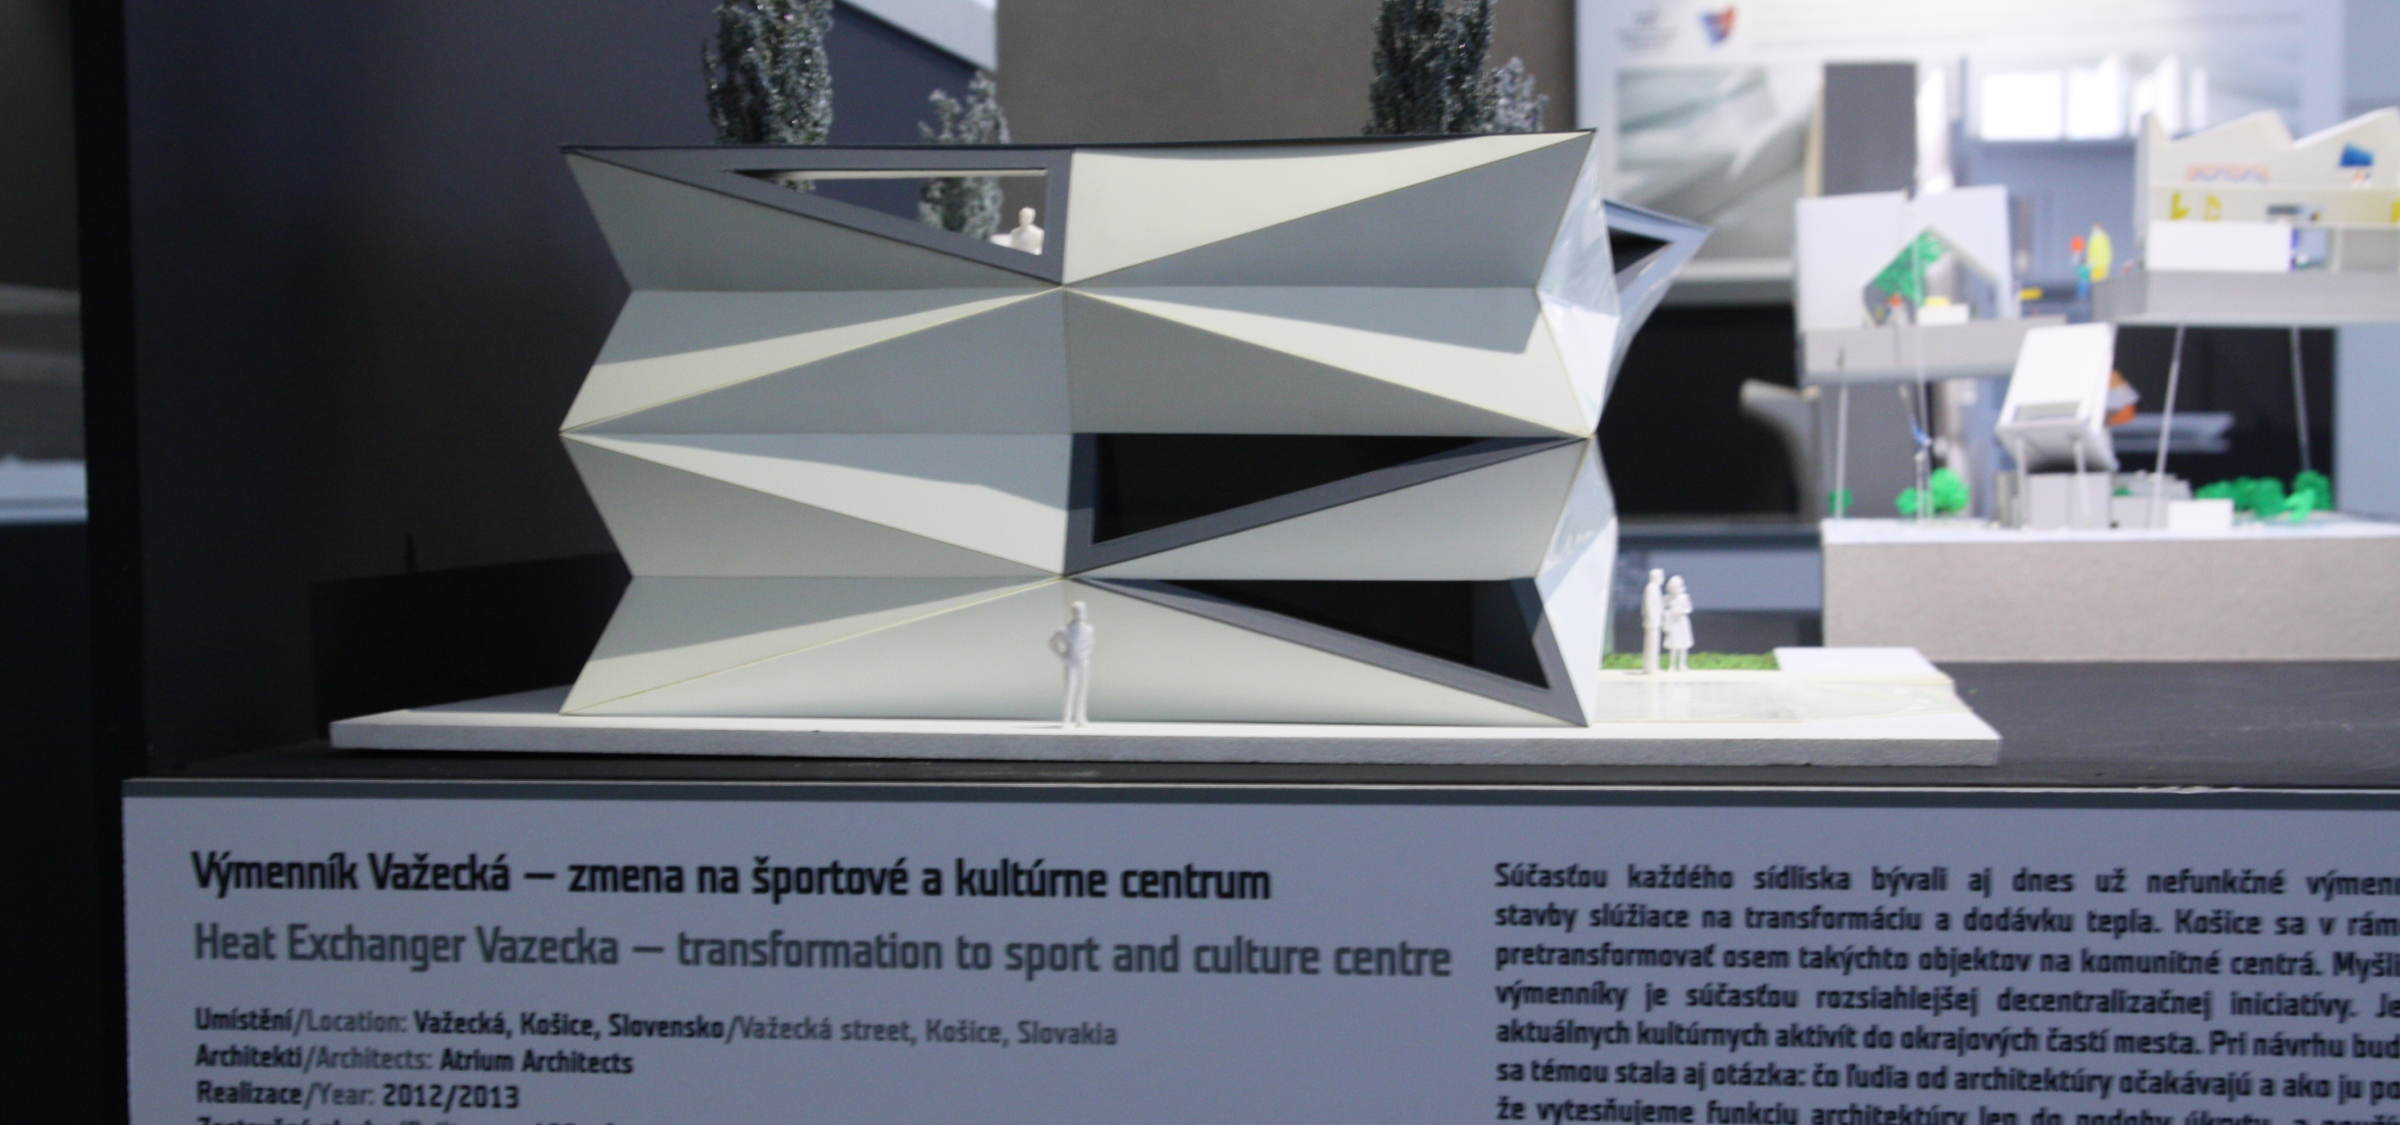 Atrium on Architecture Week Prague 2015 | News | Atrium Architekti